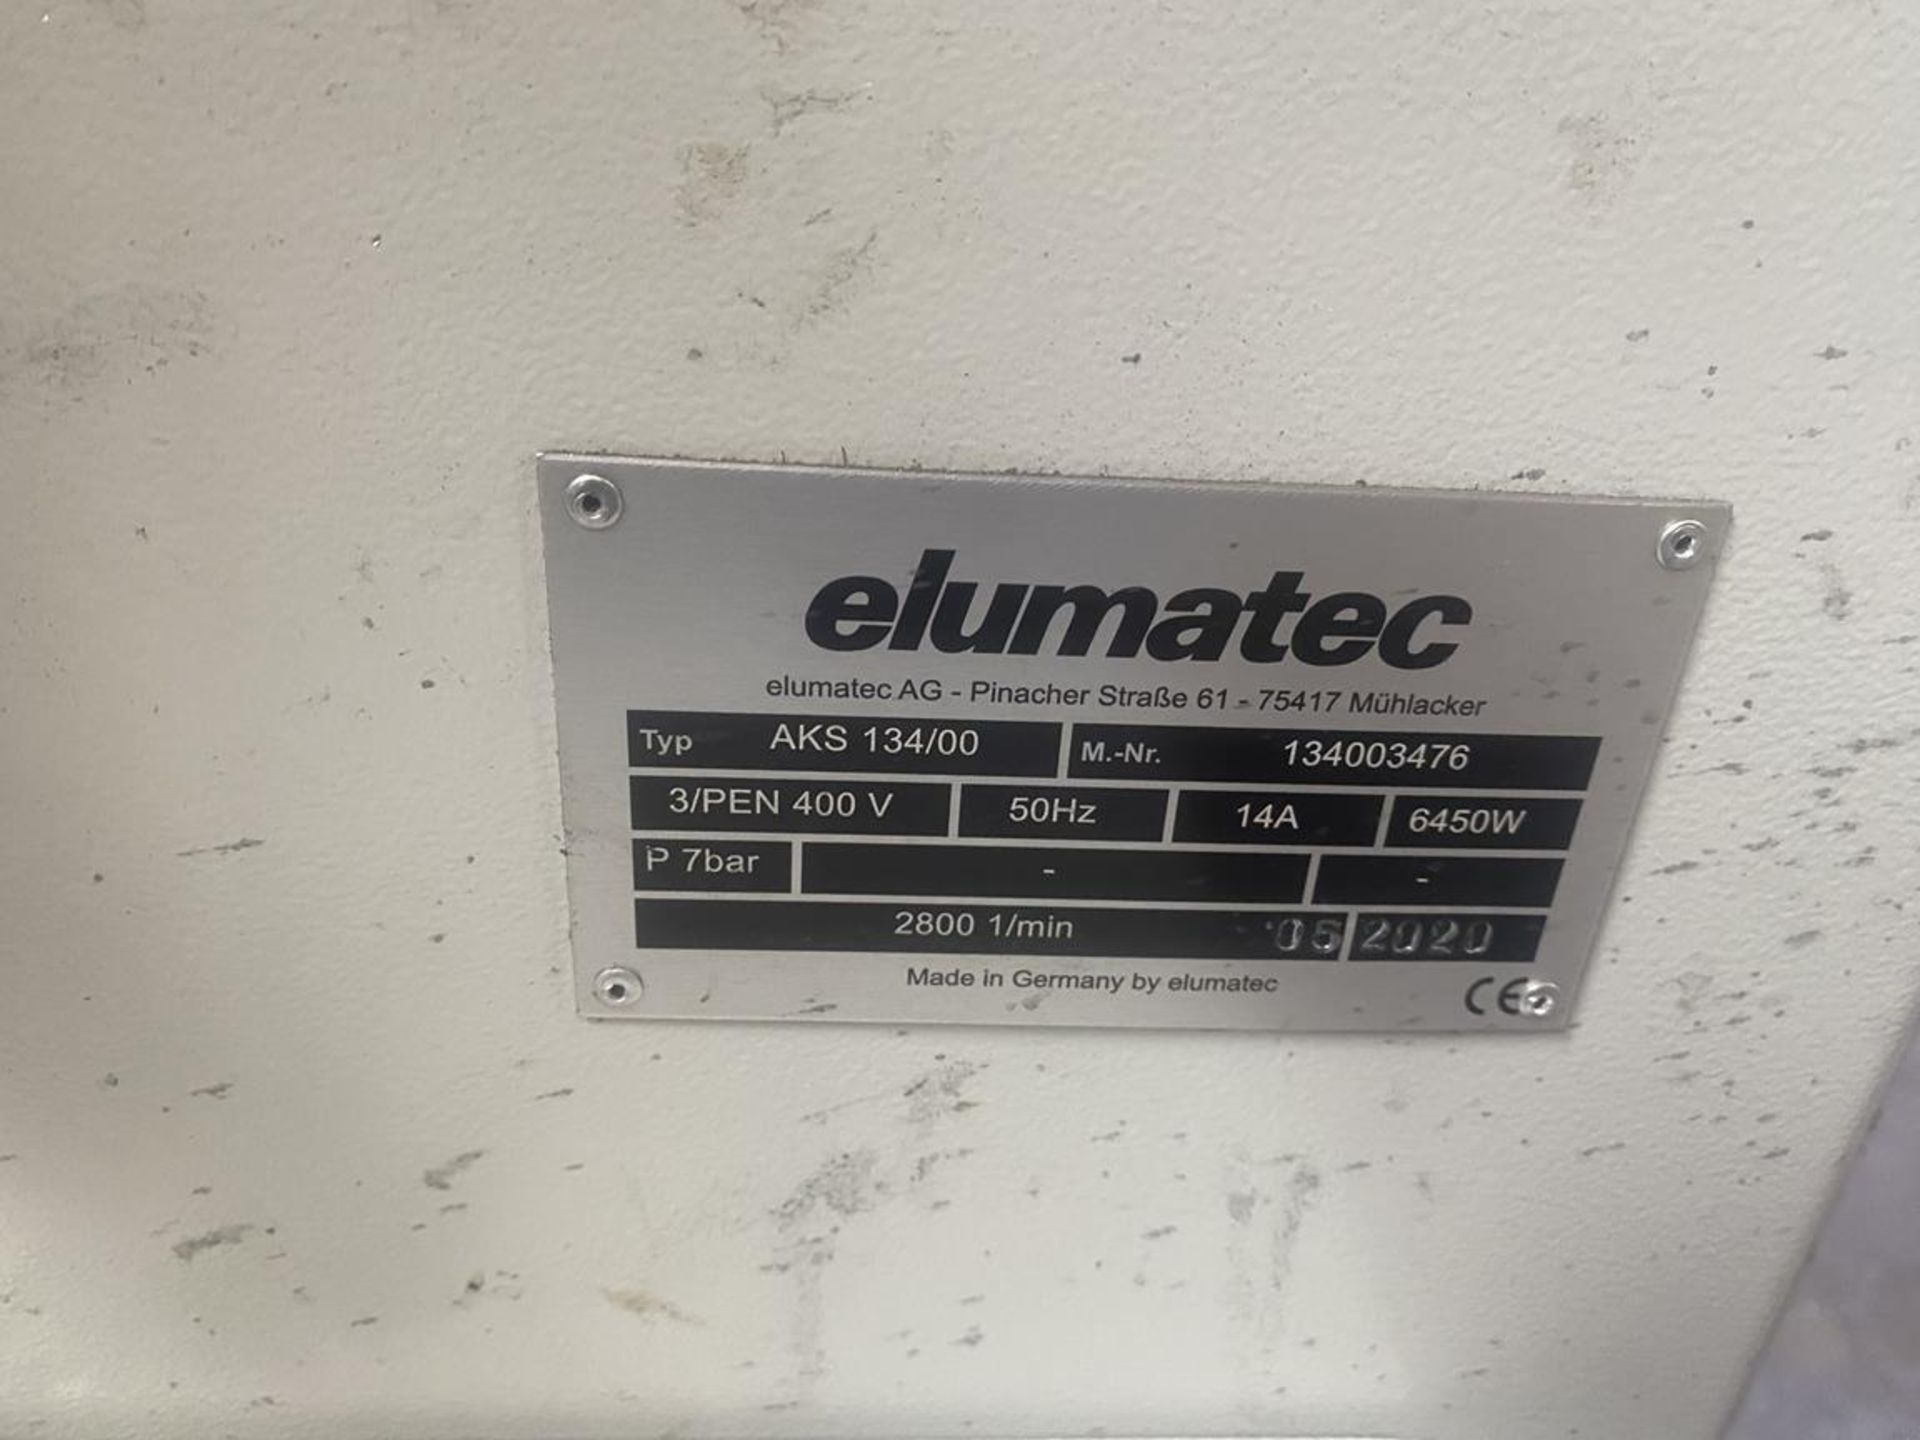 Elumatec Model AKS1340/00 precision notching saw, serial No 134003476 (2020) - Image 2 of 4